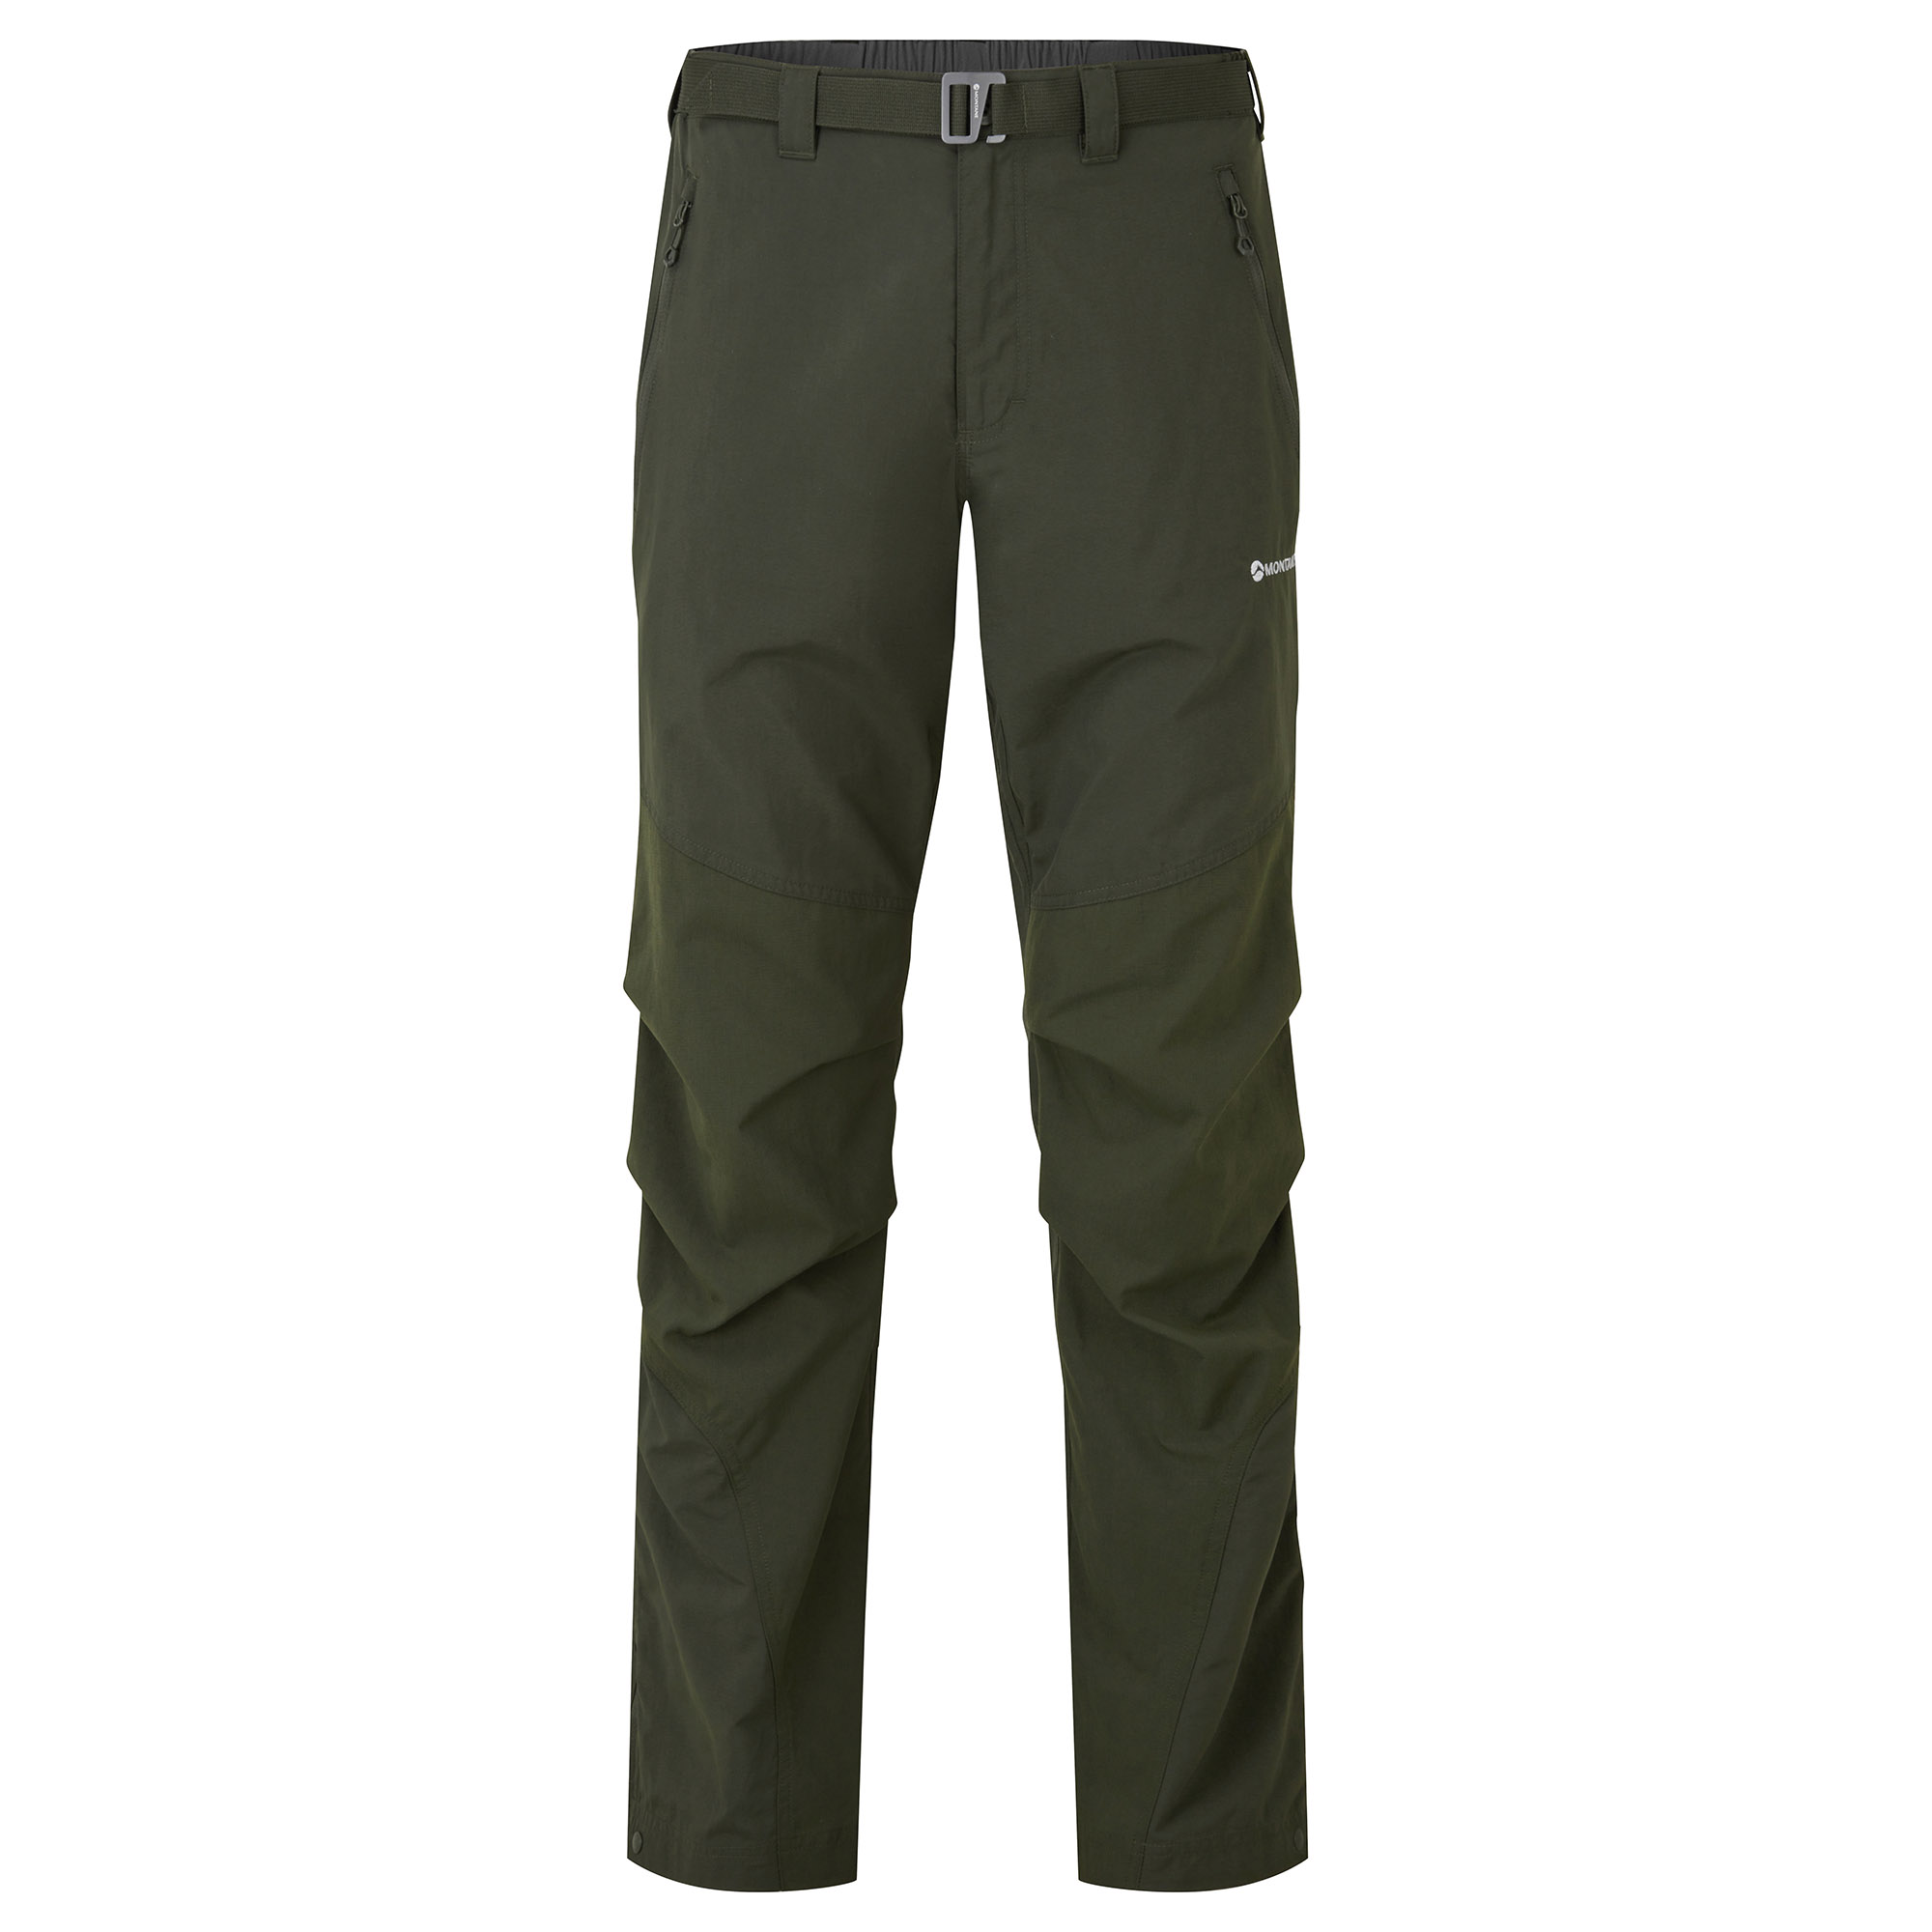 Montane pánské softshellové kalhoty Terra Pants - Běžná Délka Barva: Oak Green, Velikost: 38